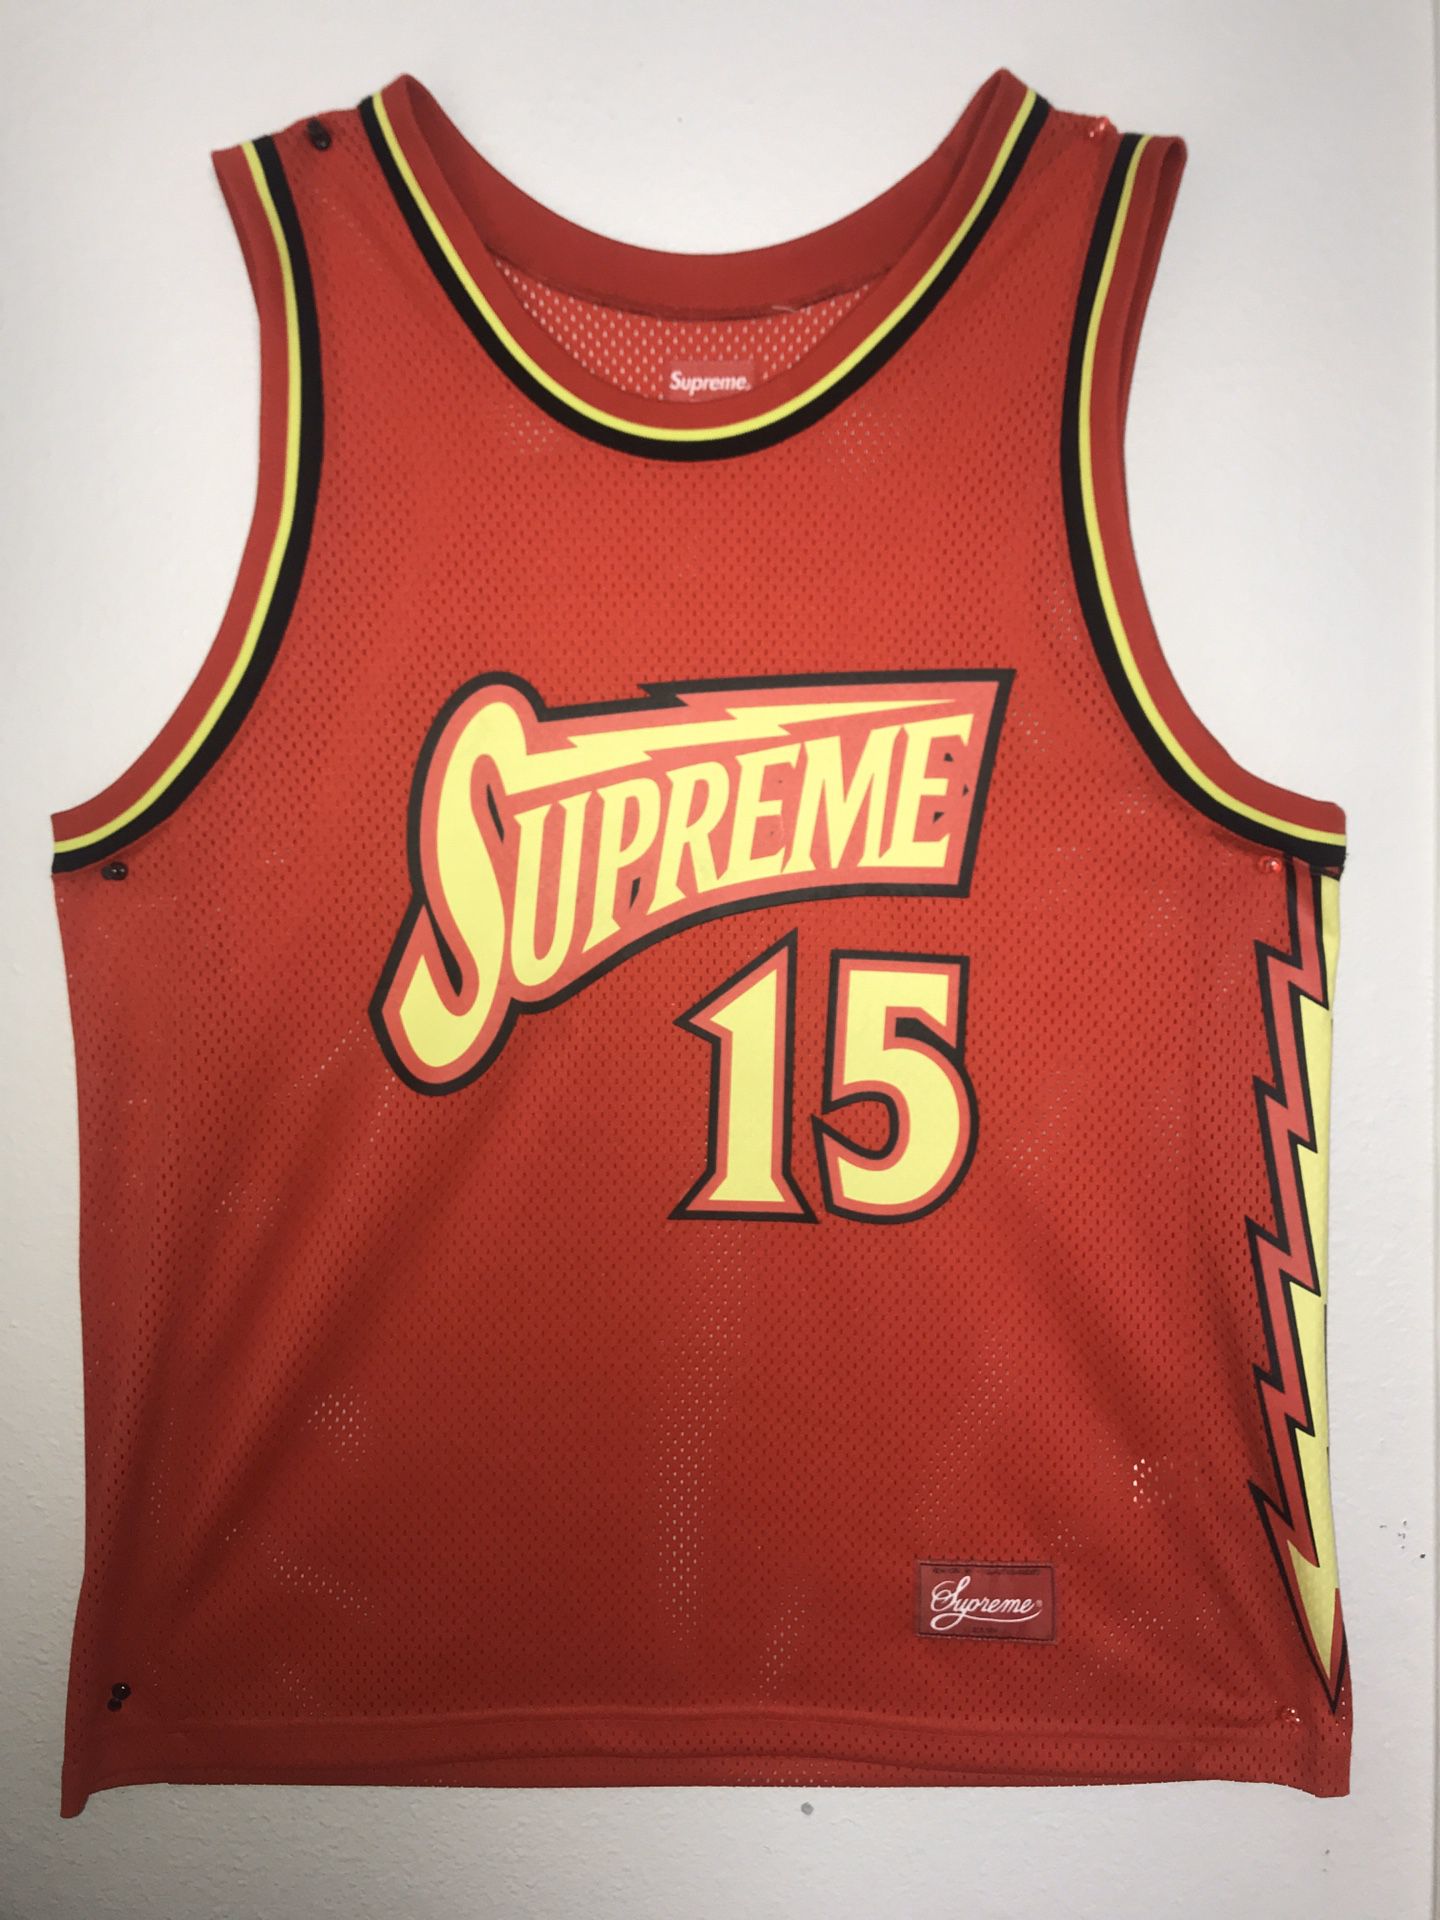 Supreme basketball jersey